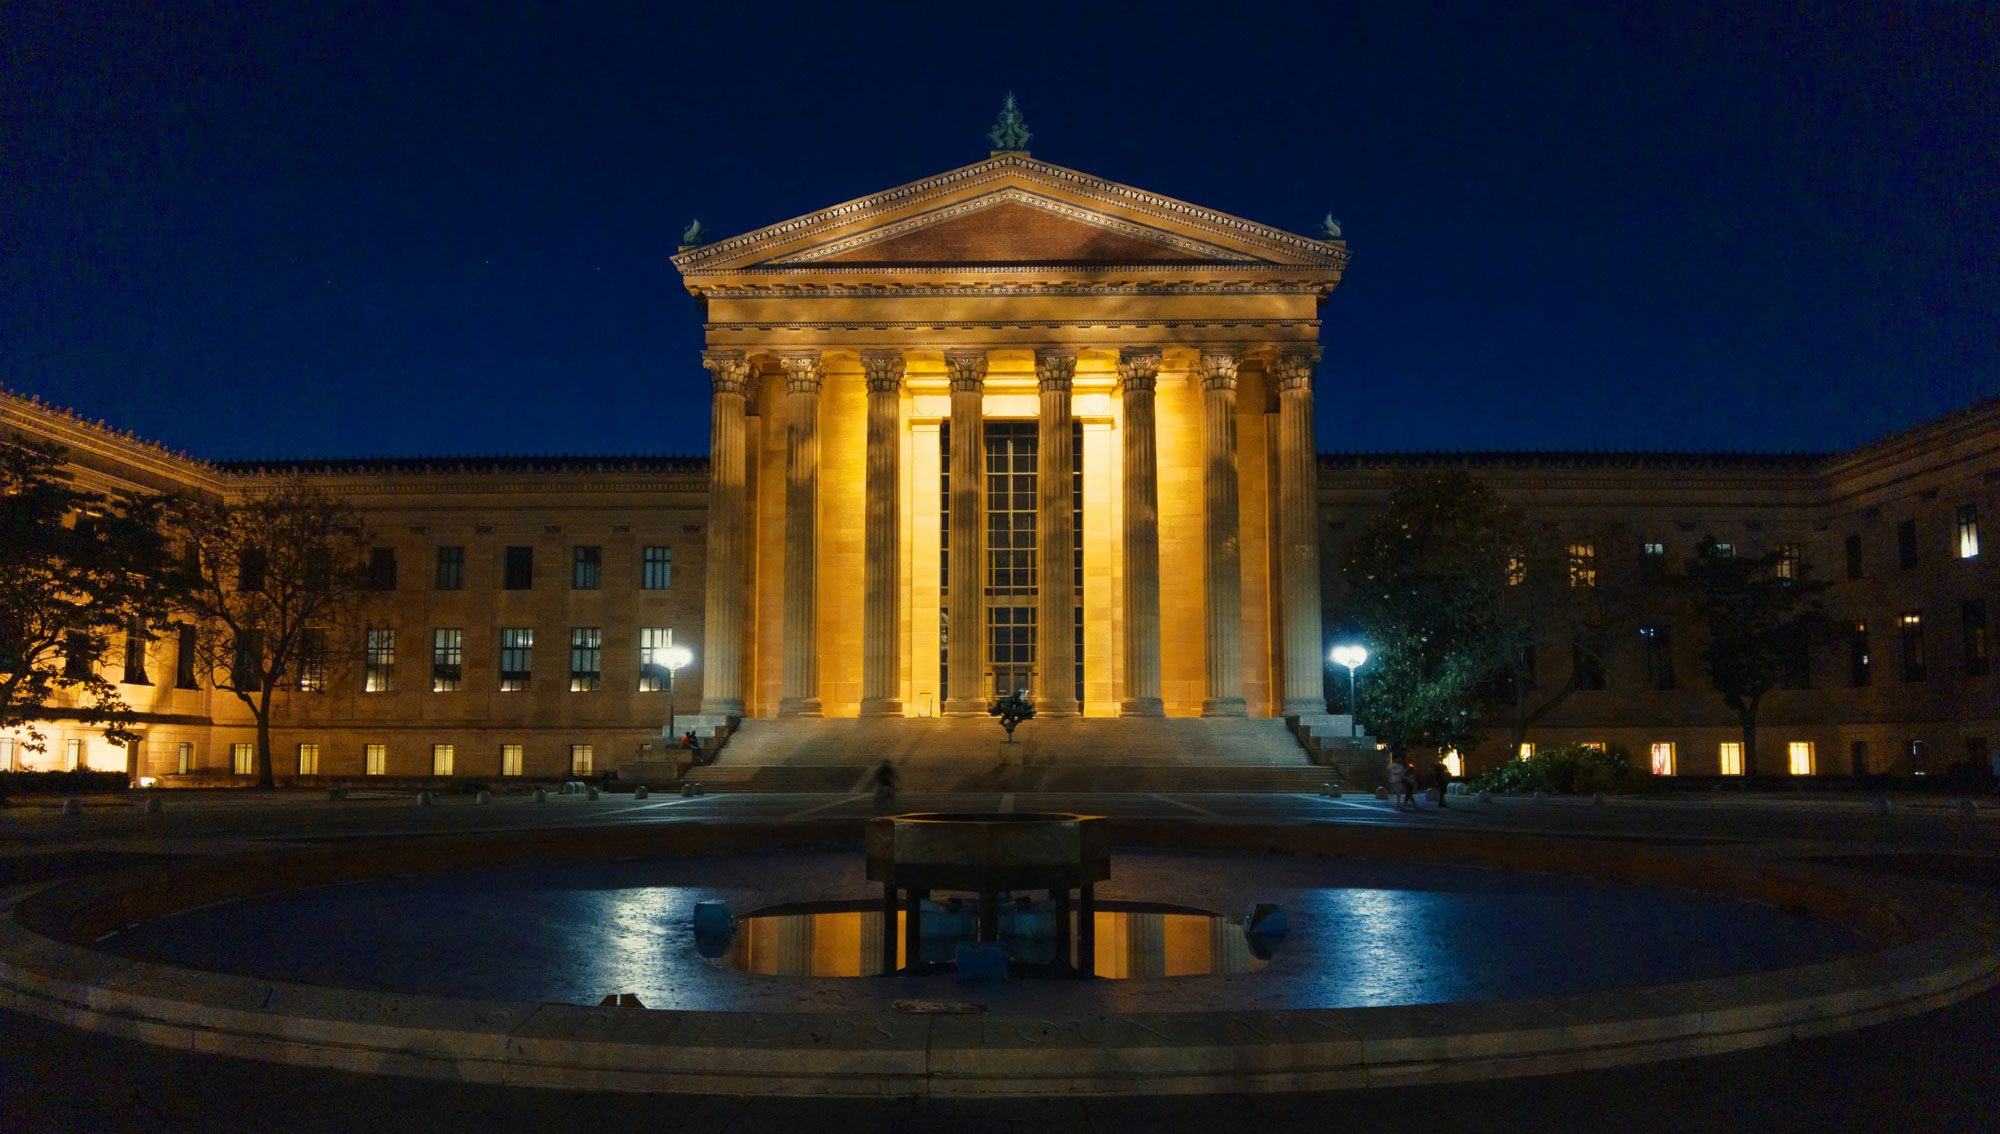 The Philadelphia Museum of Art at night.